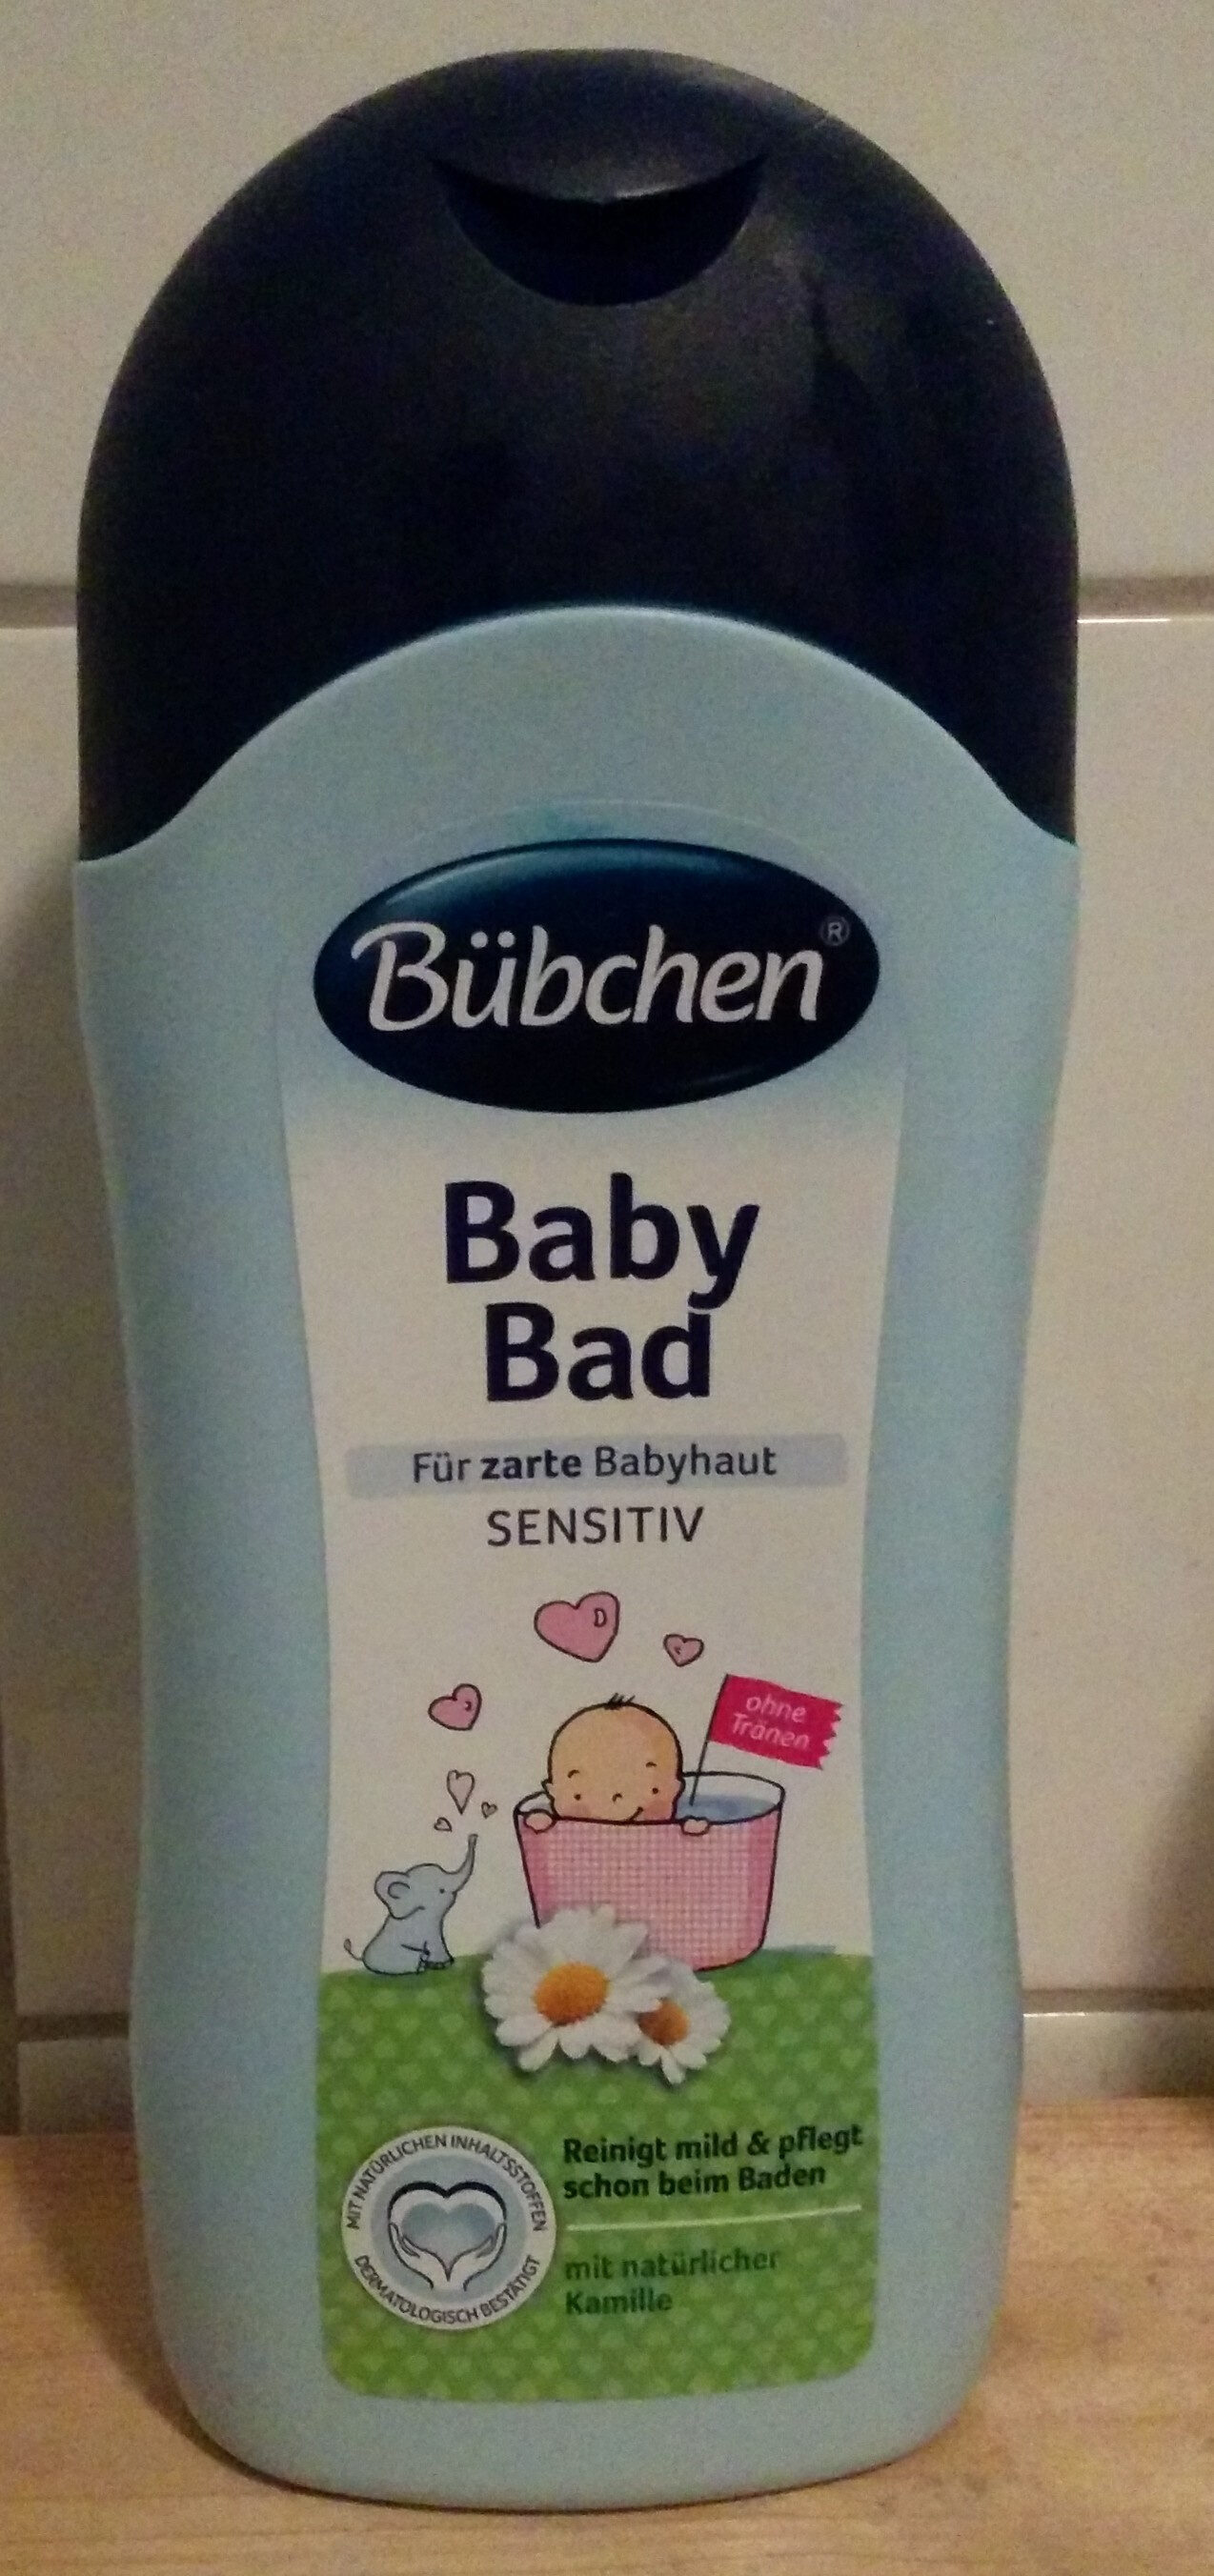 Baby Bad Sensitiv - Produkt - de